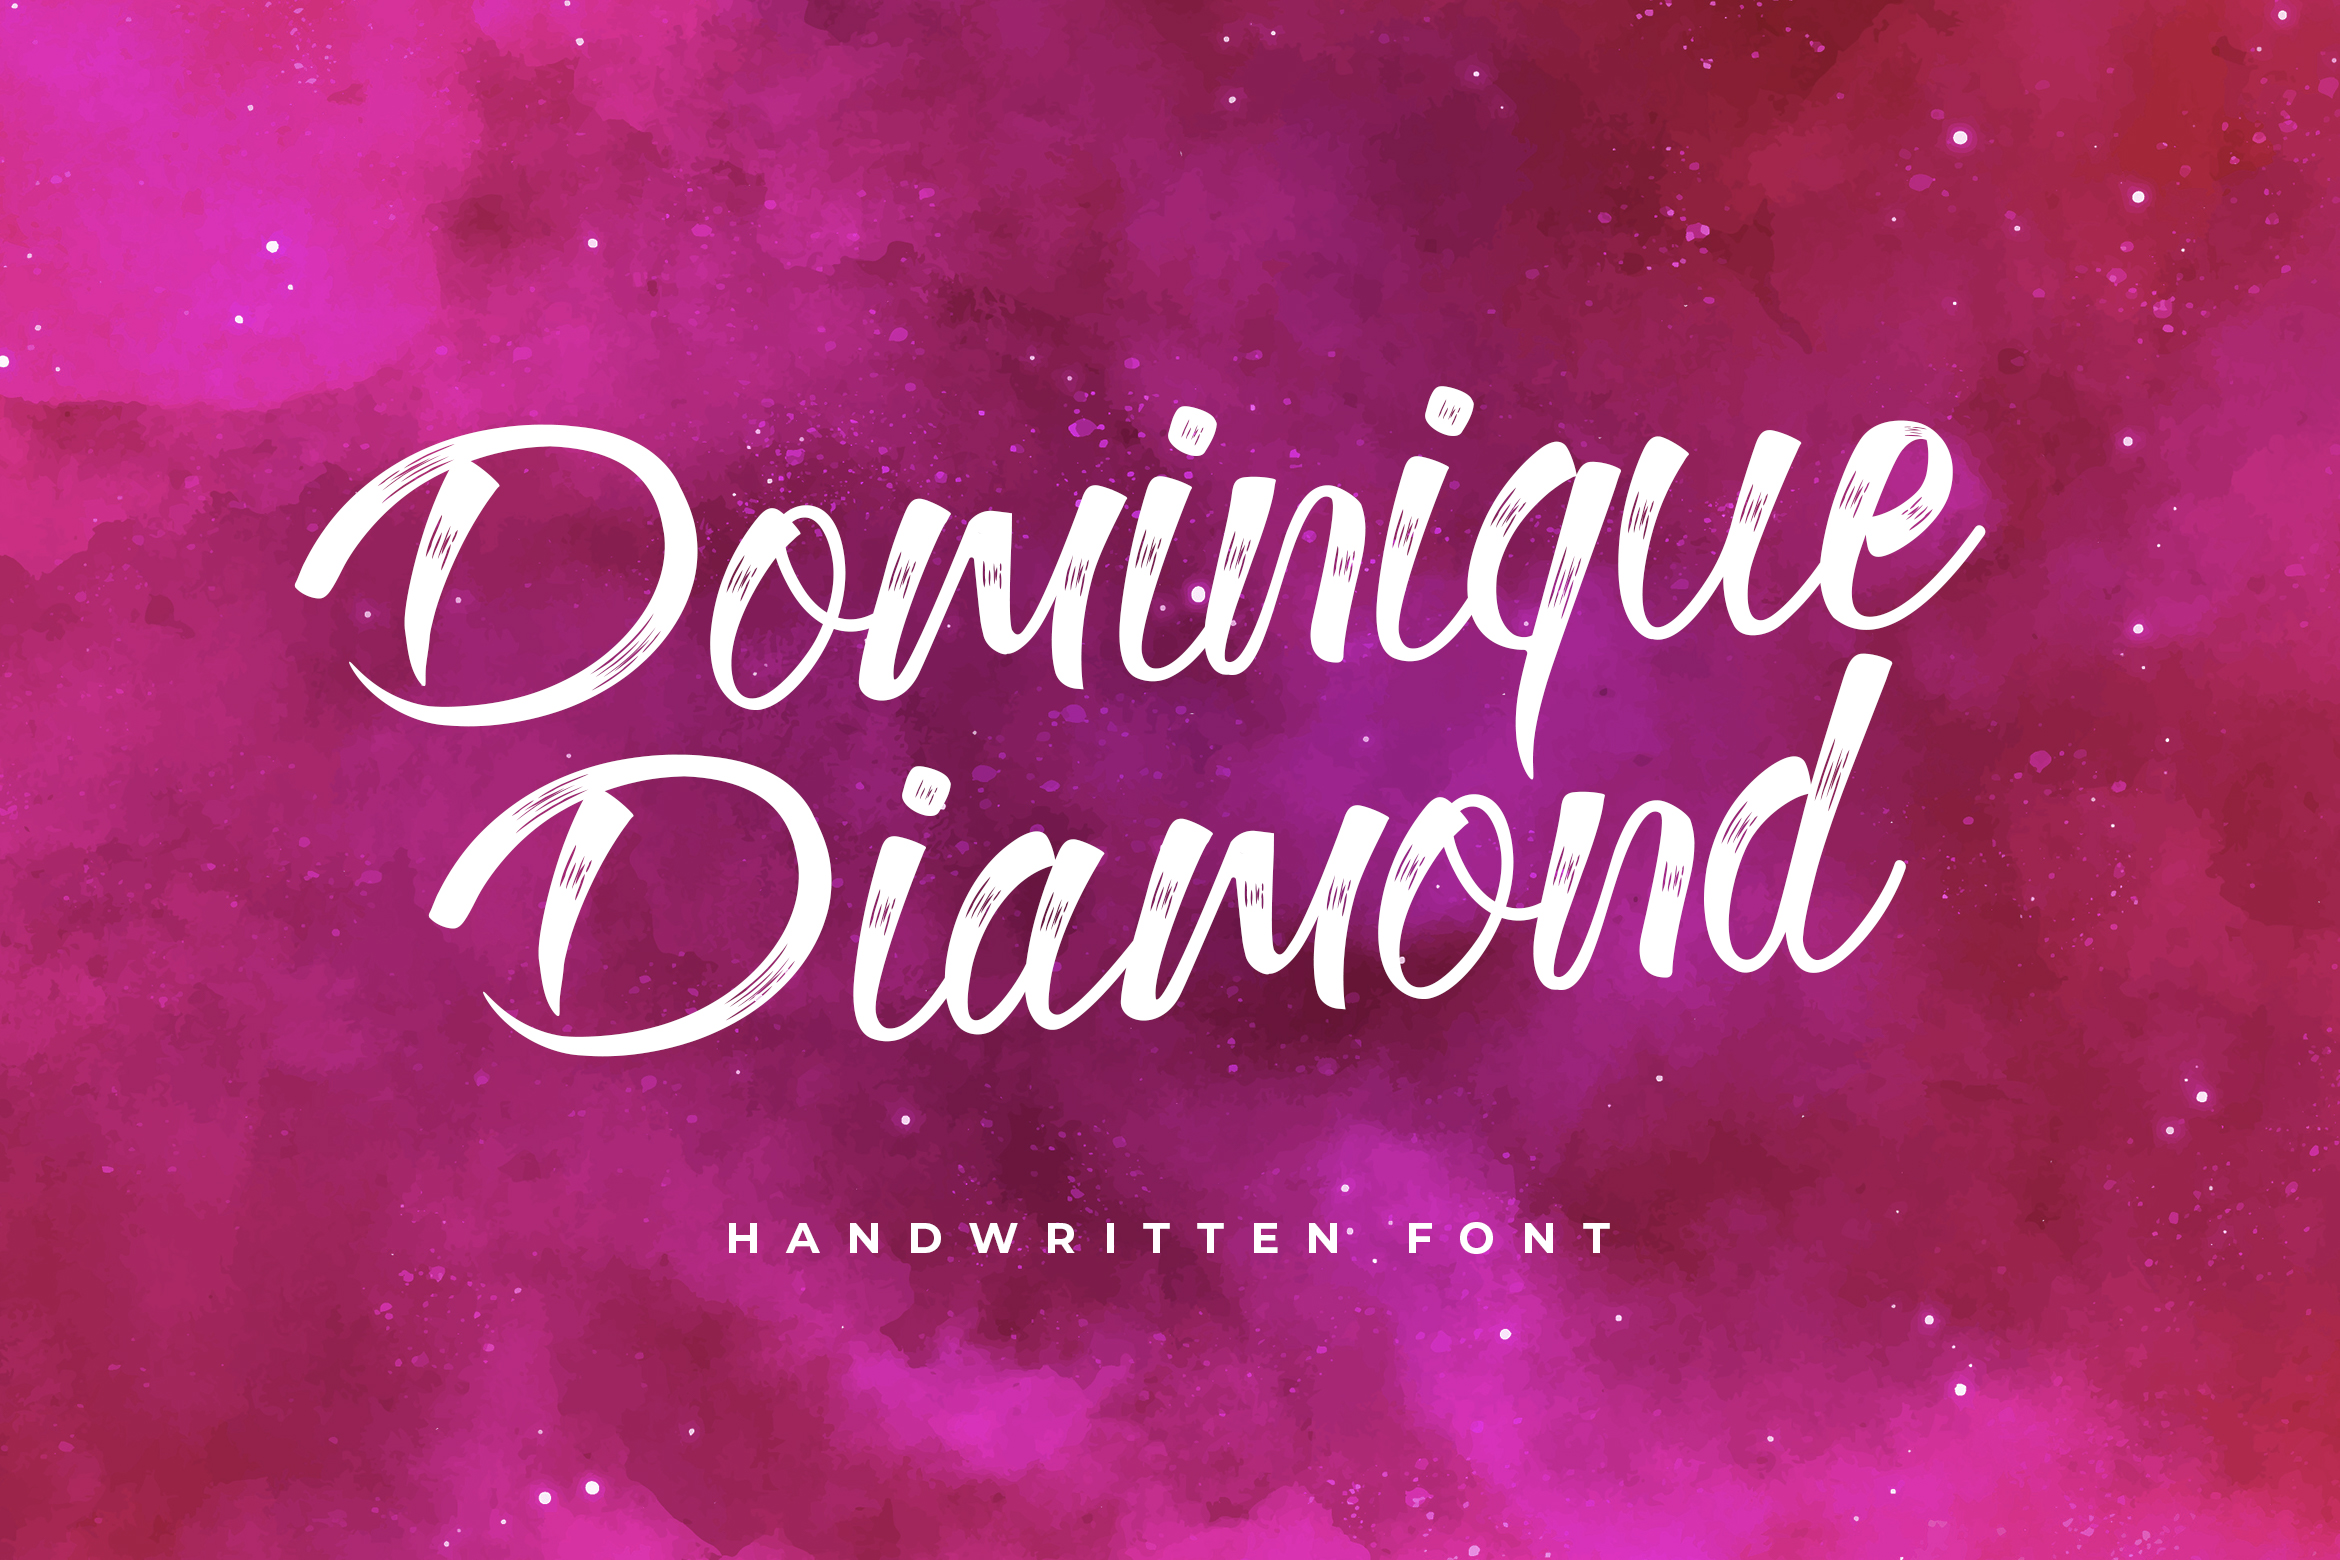 Dominique Diamond